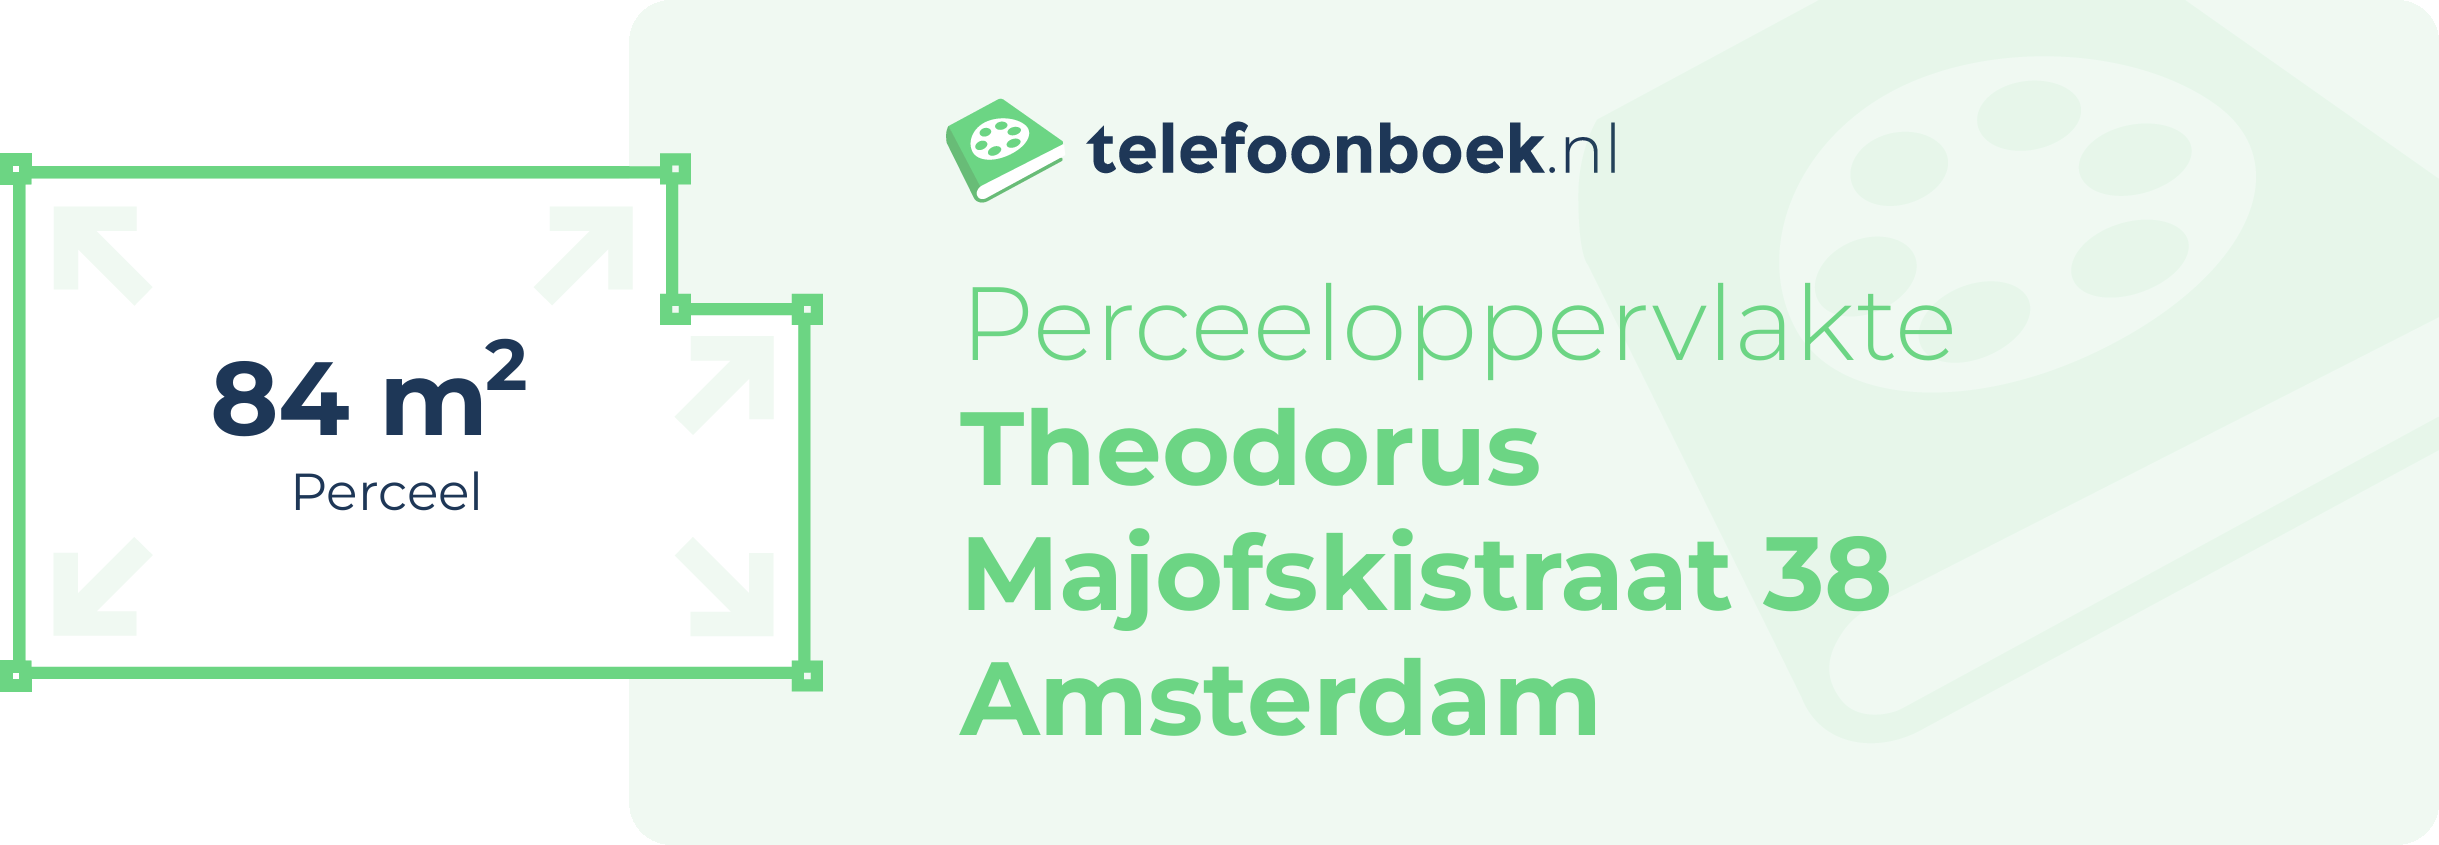 Perceeloppervlakte Theodorus Majofskistraat 38 Amsterdam